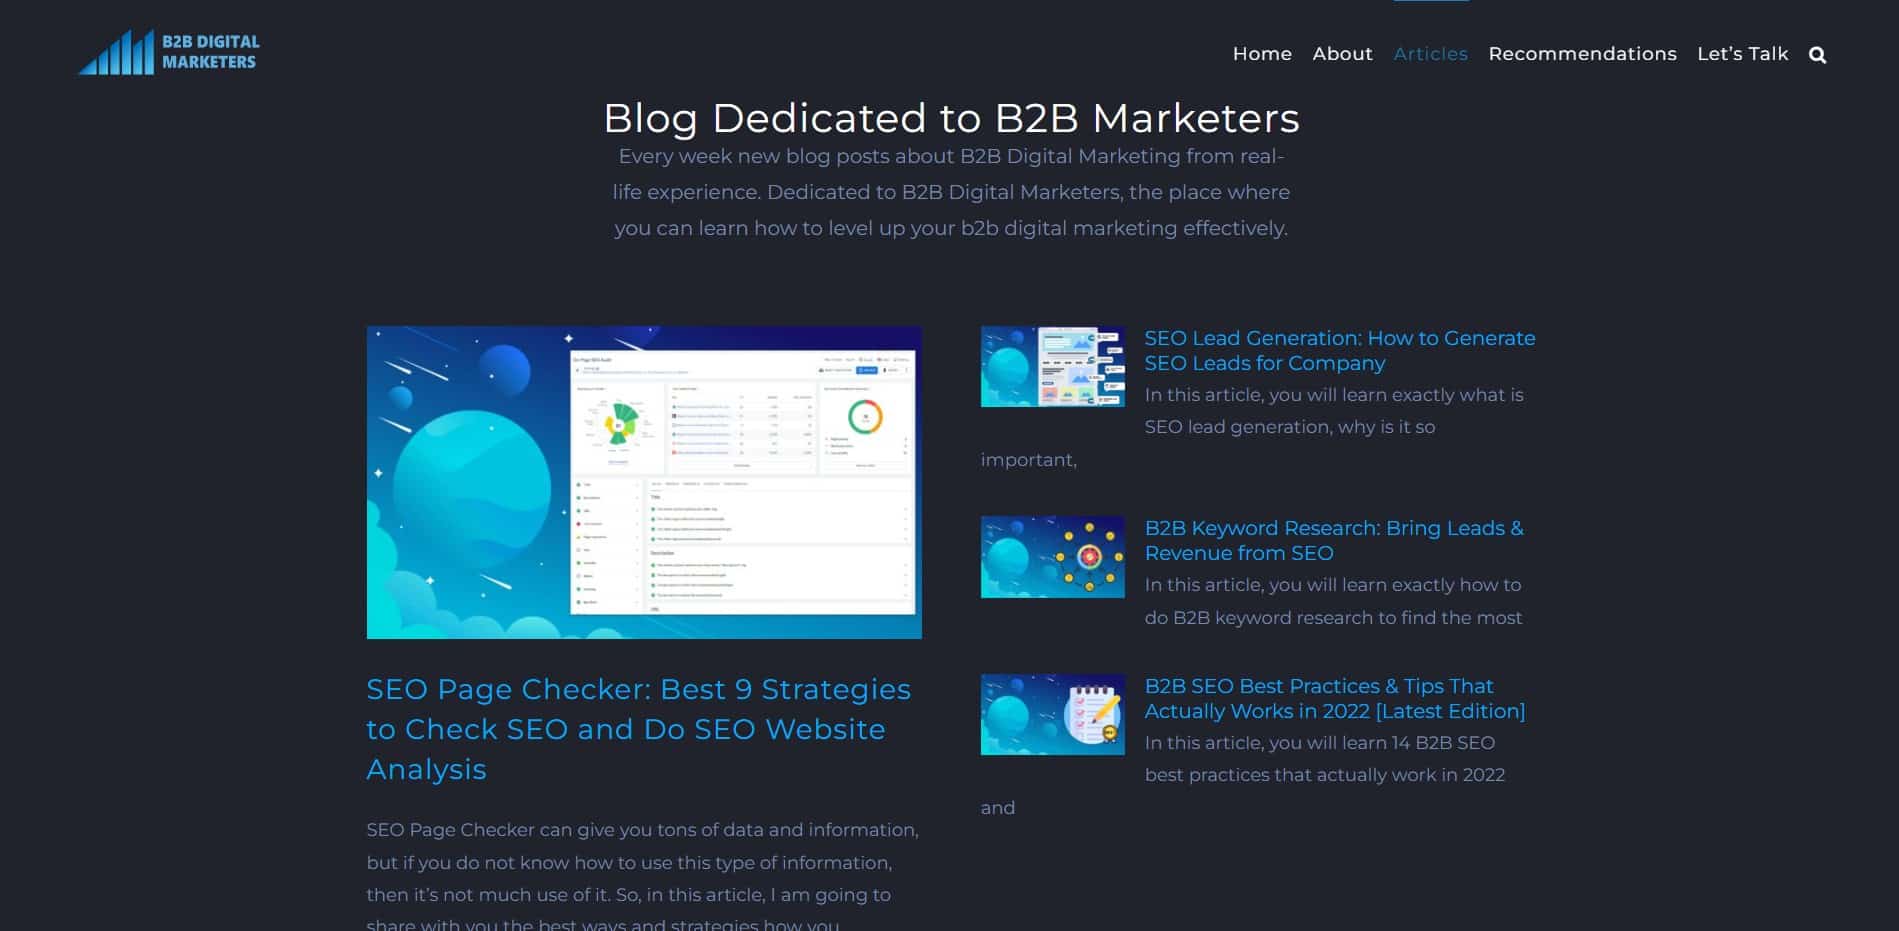 b2bdigitalmarketers is one of the best b2b marketing blogs my humble opinion